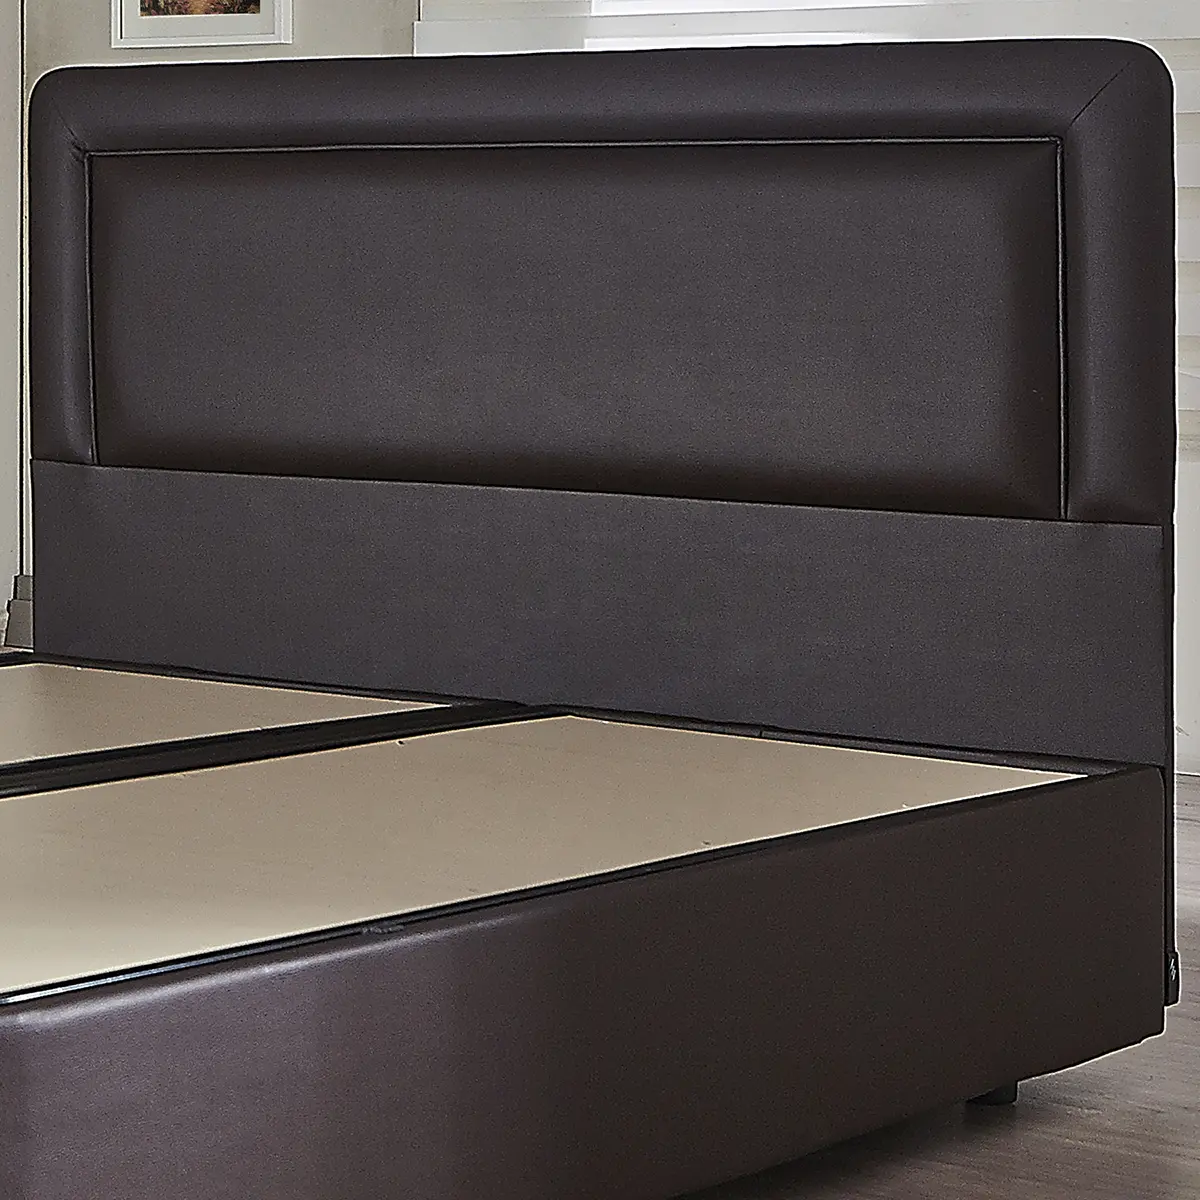 Headboard Kamelya Bed Modern Dark Brown Headboard 160 cm for Bedroom Furniture made in Turkey, Wholesale, Hot Sale